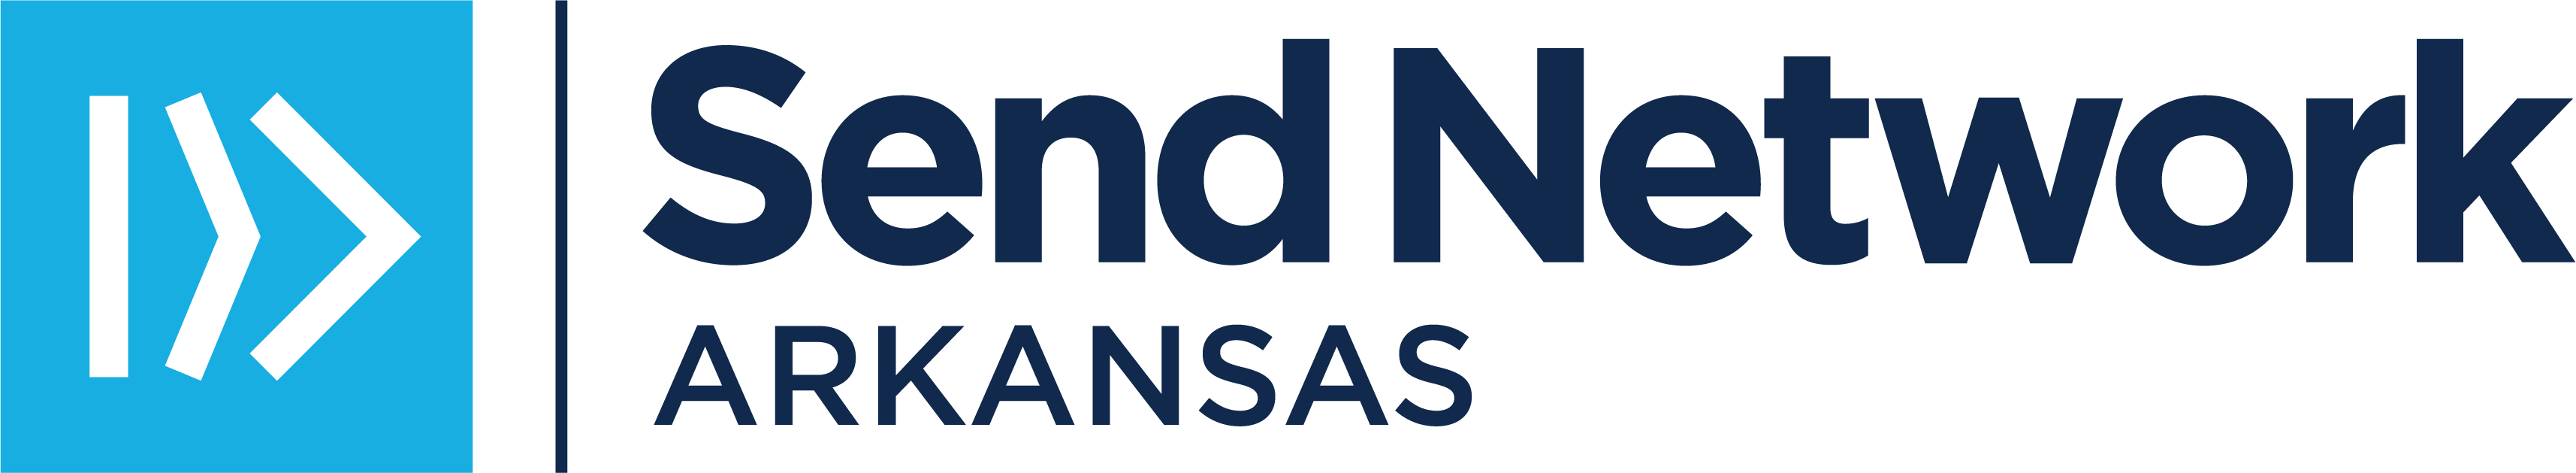 SN Arkansas Logo_BlueNavy